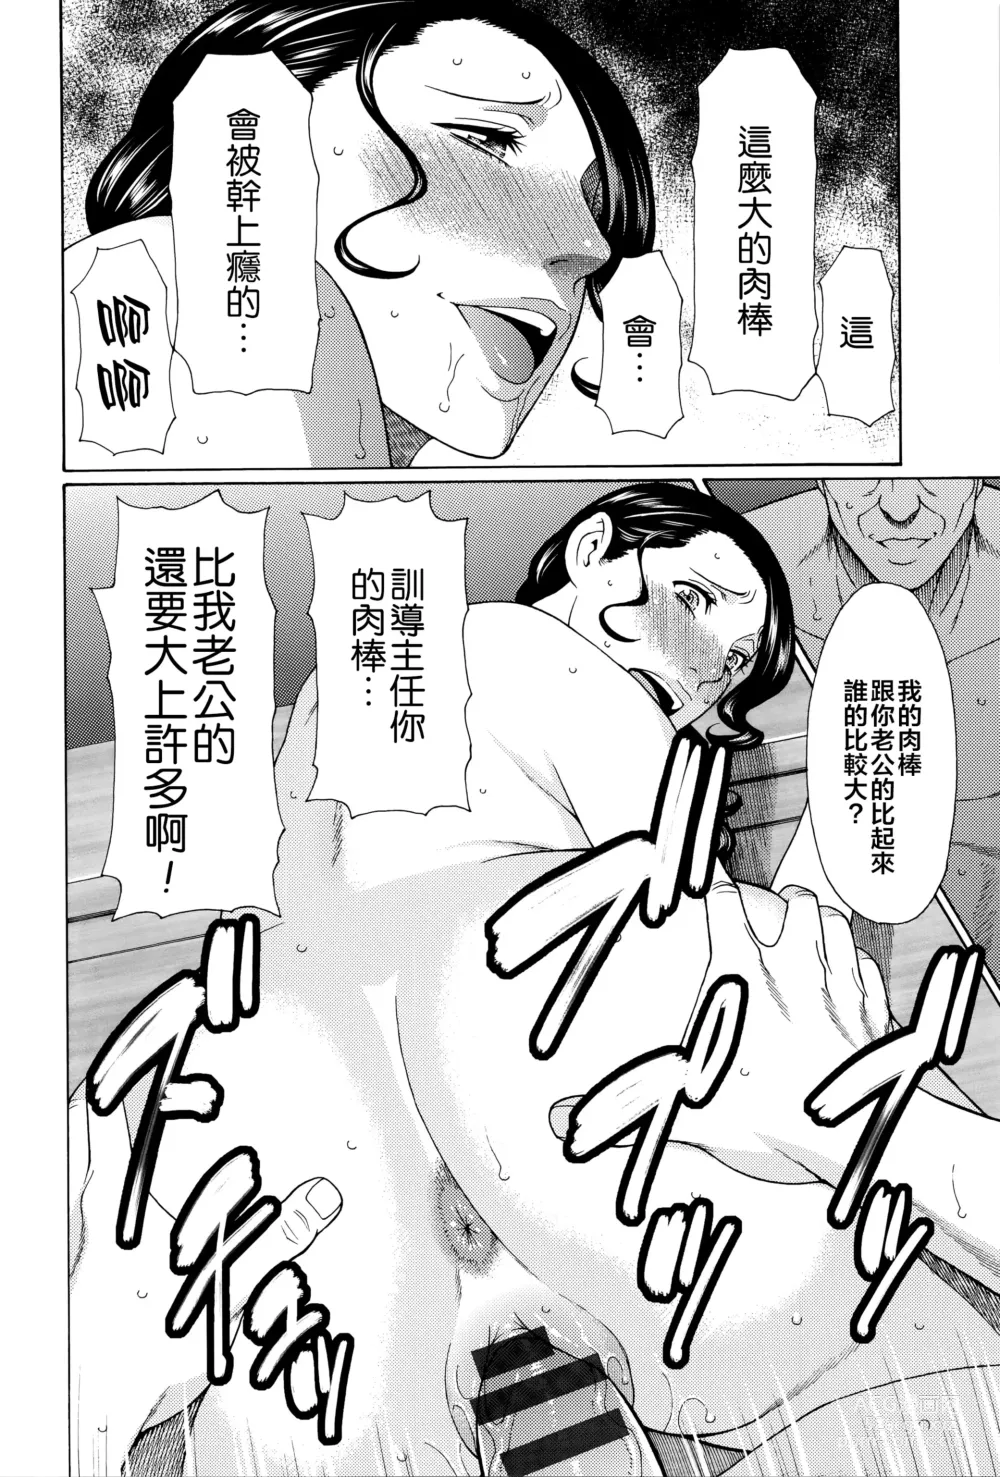 Page 181 of manga Mumyou no Uzu